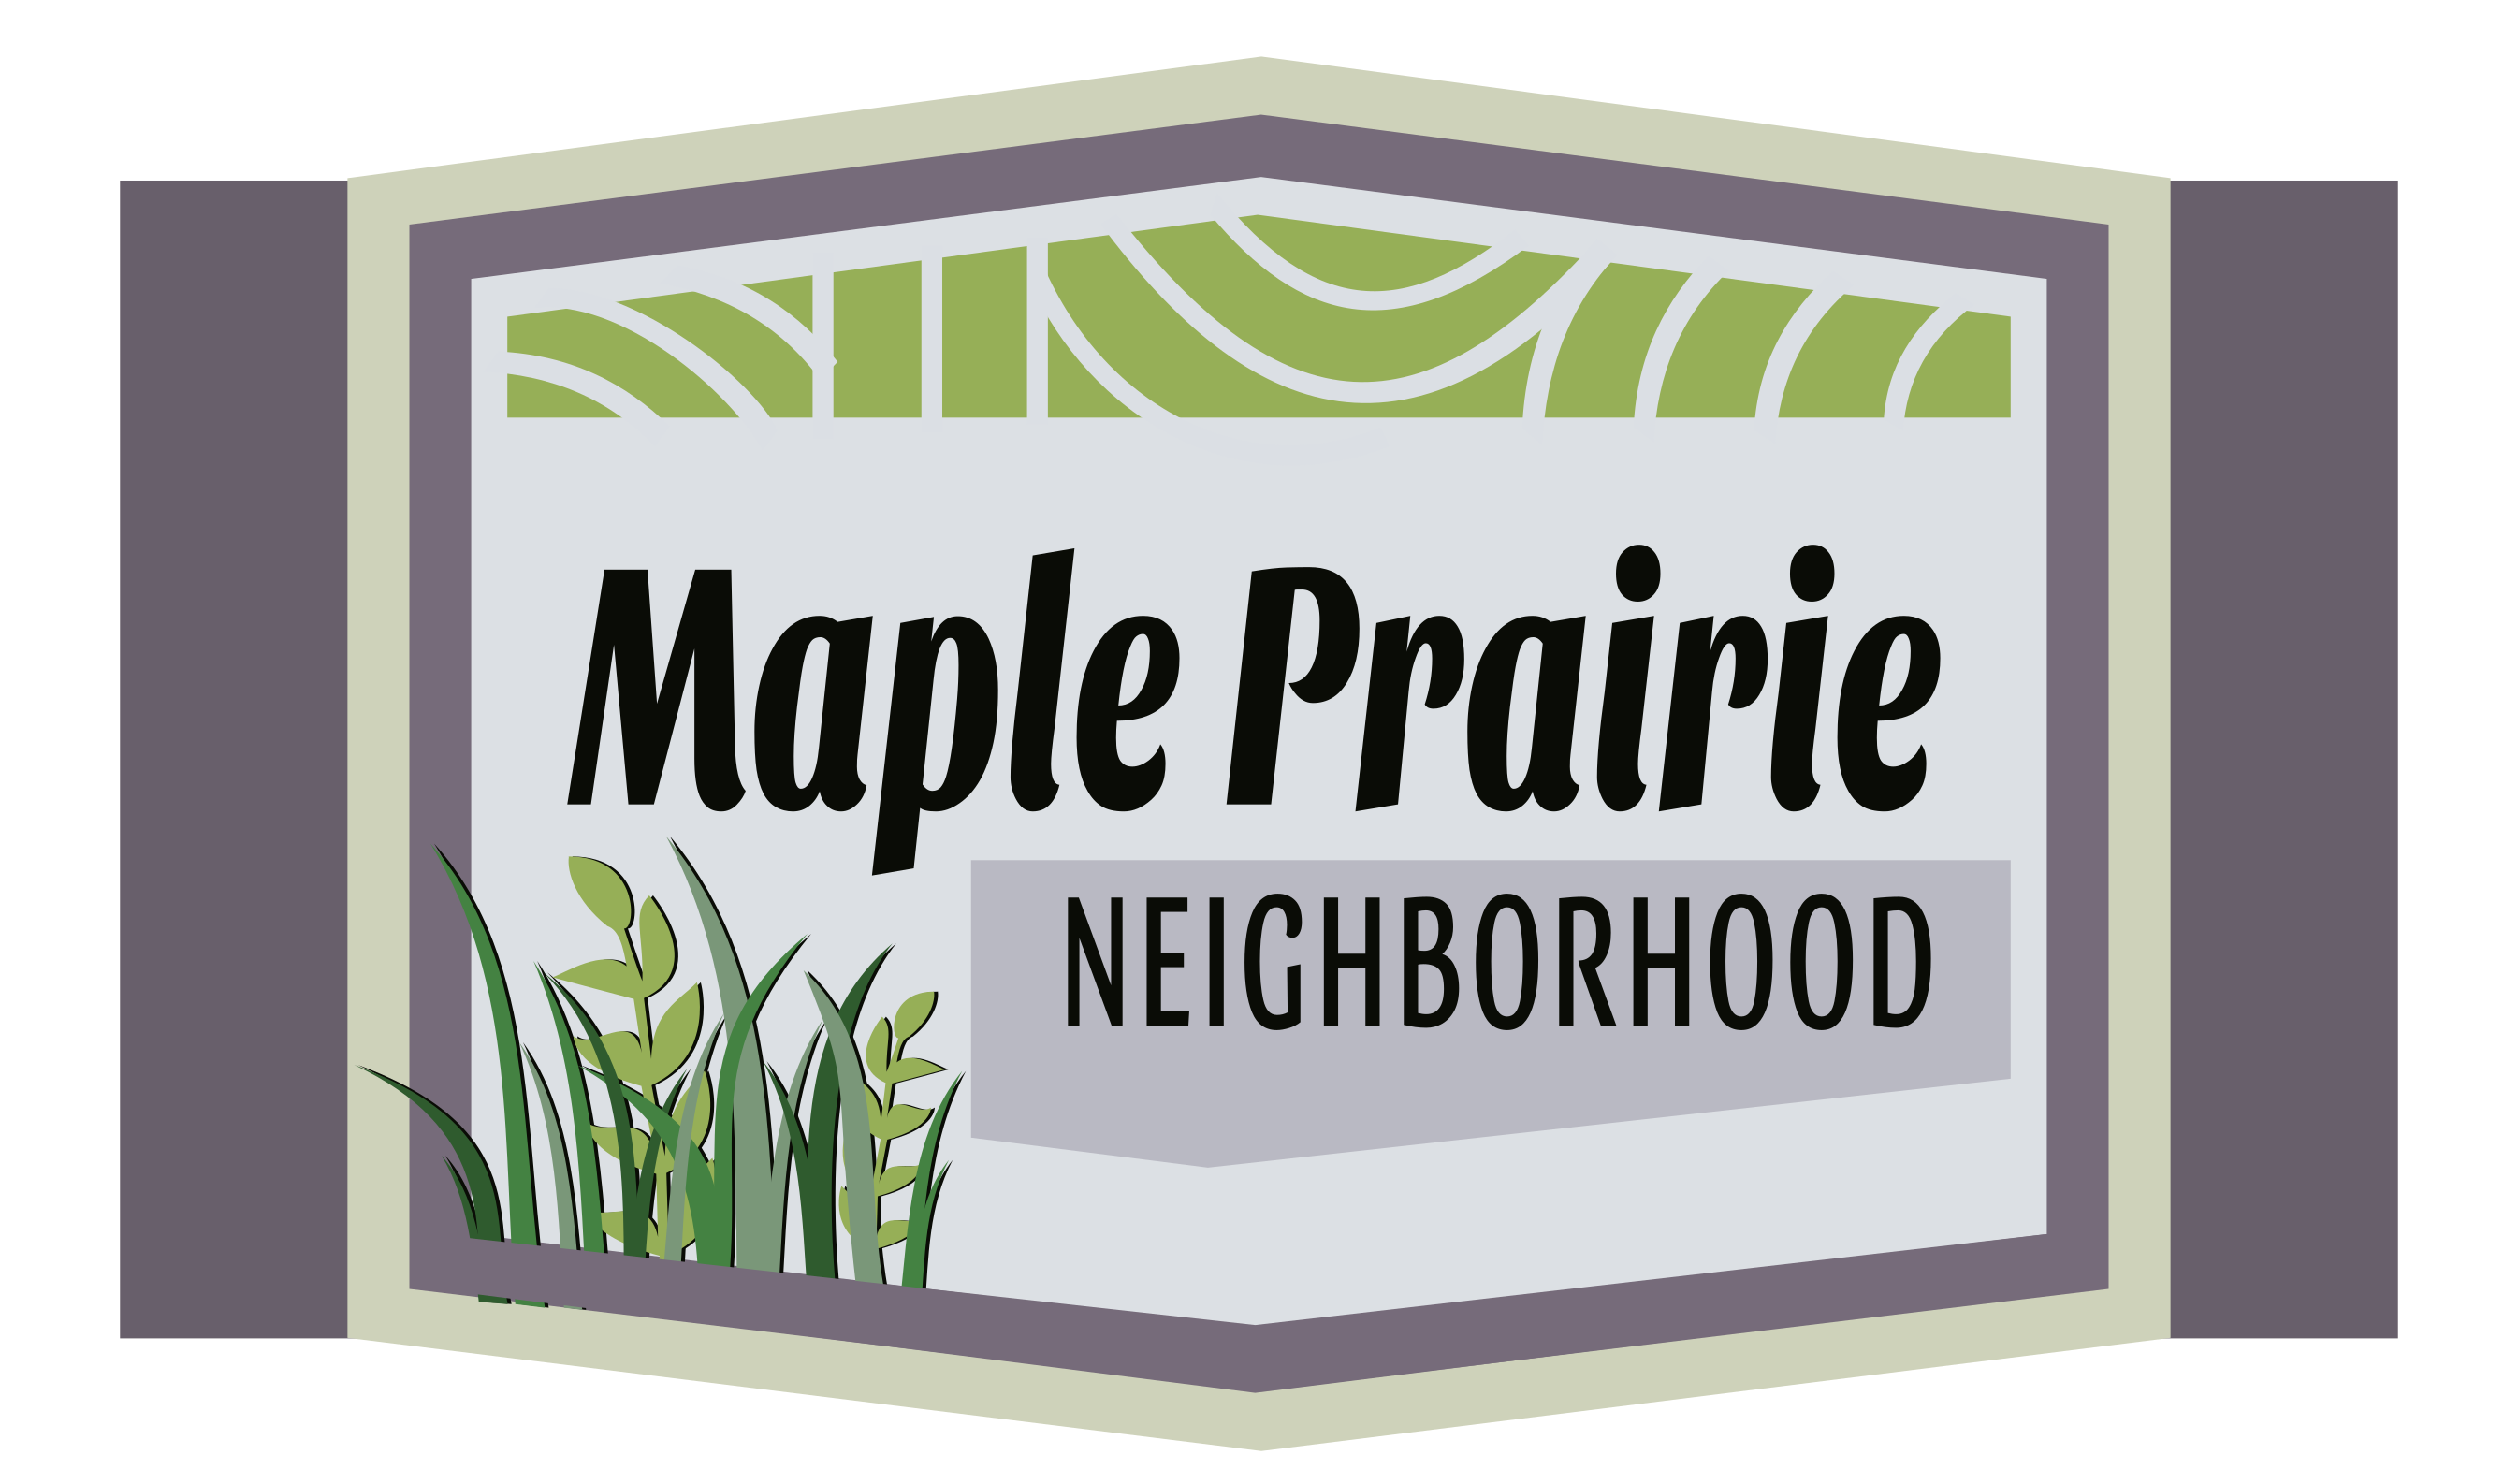 Madison's Maple Prairie Neighborhood